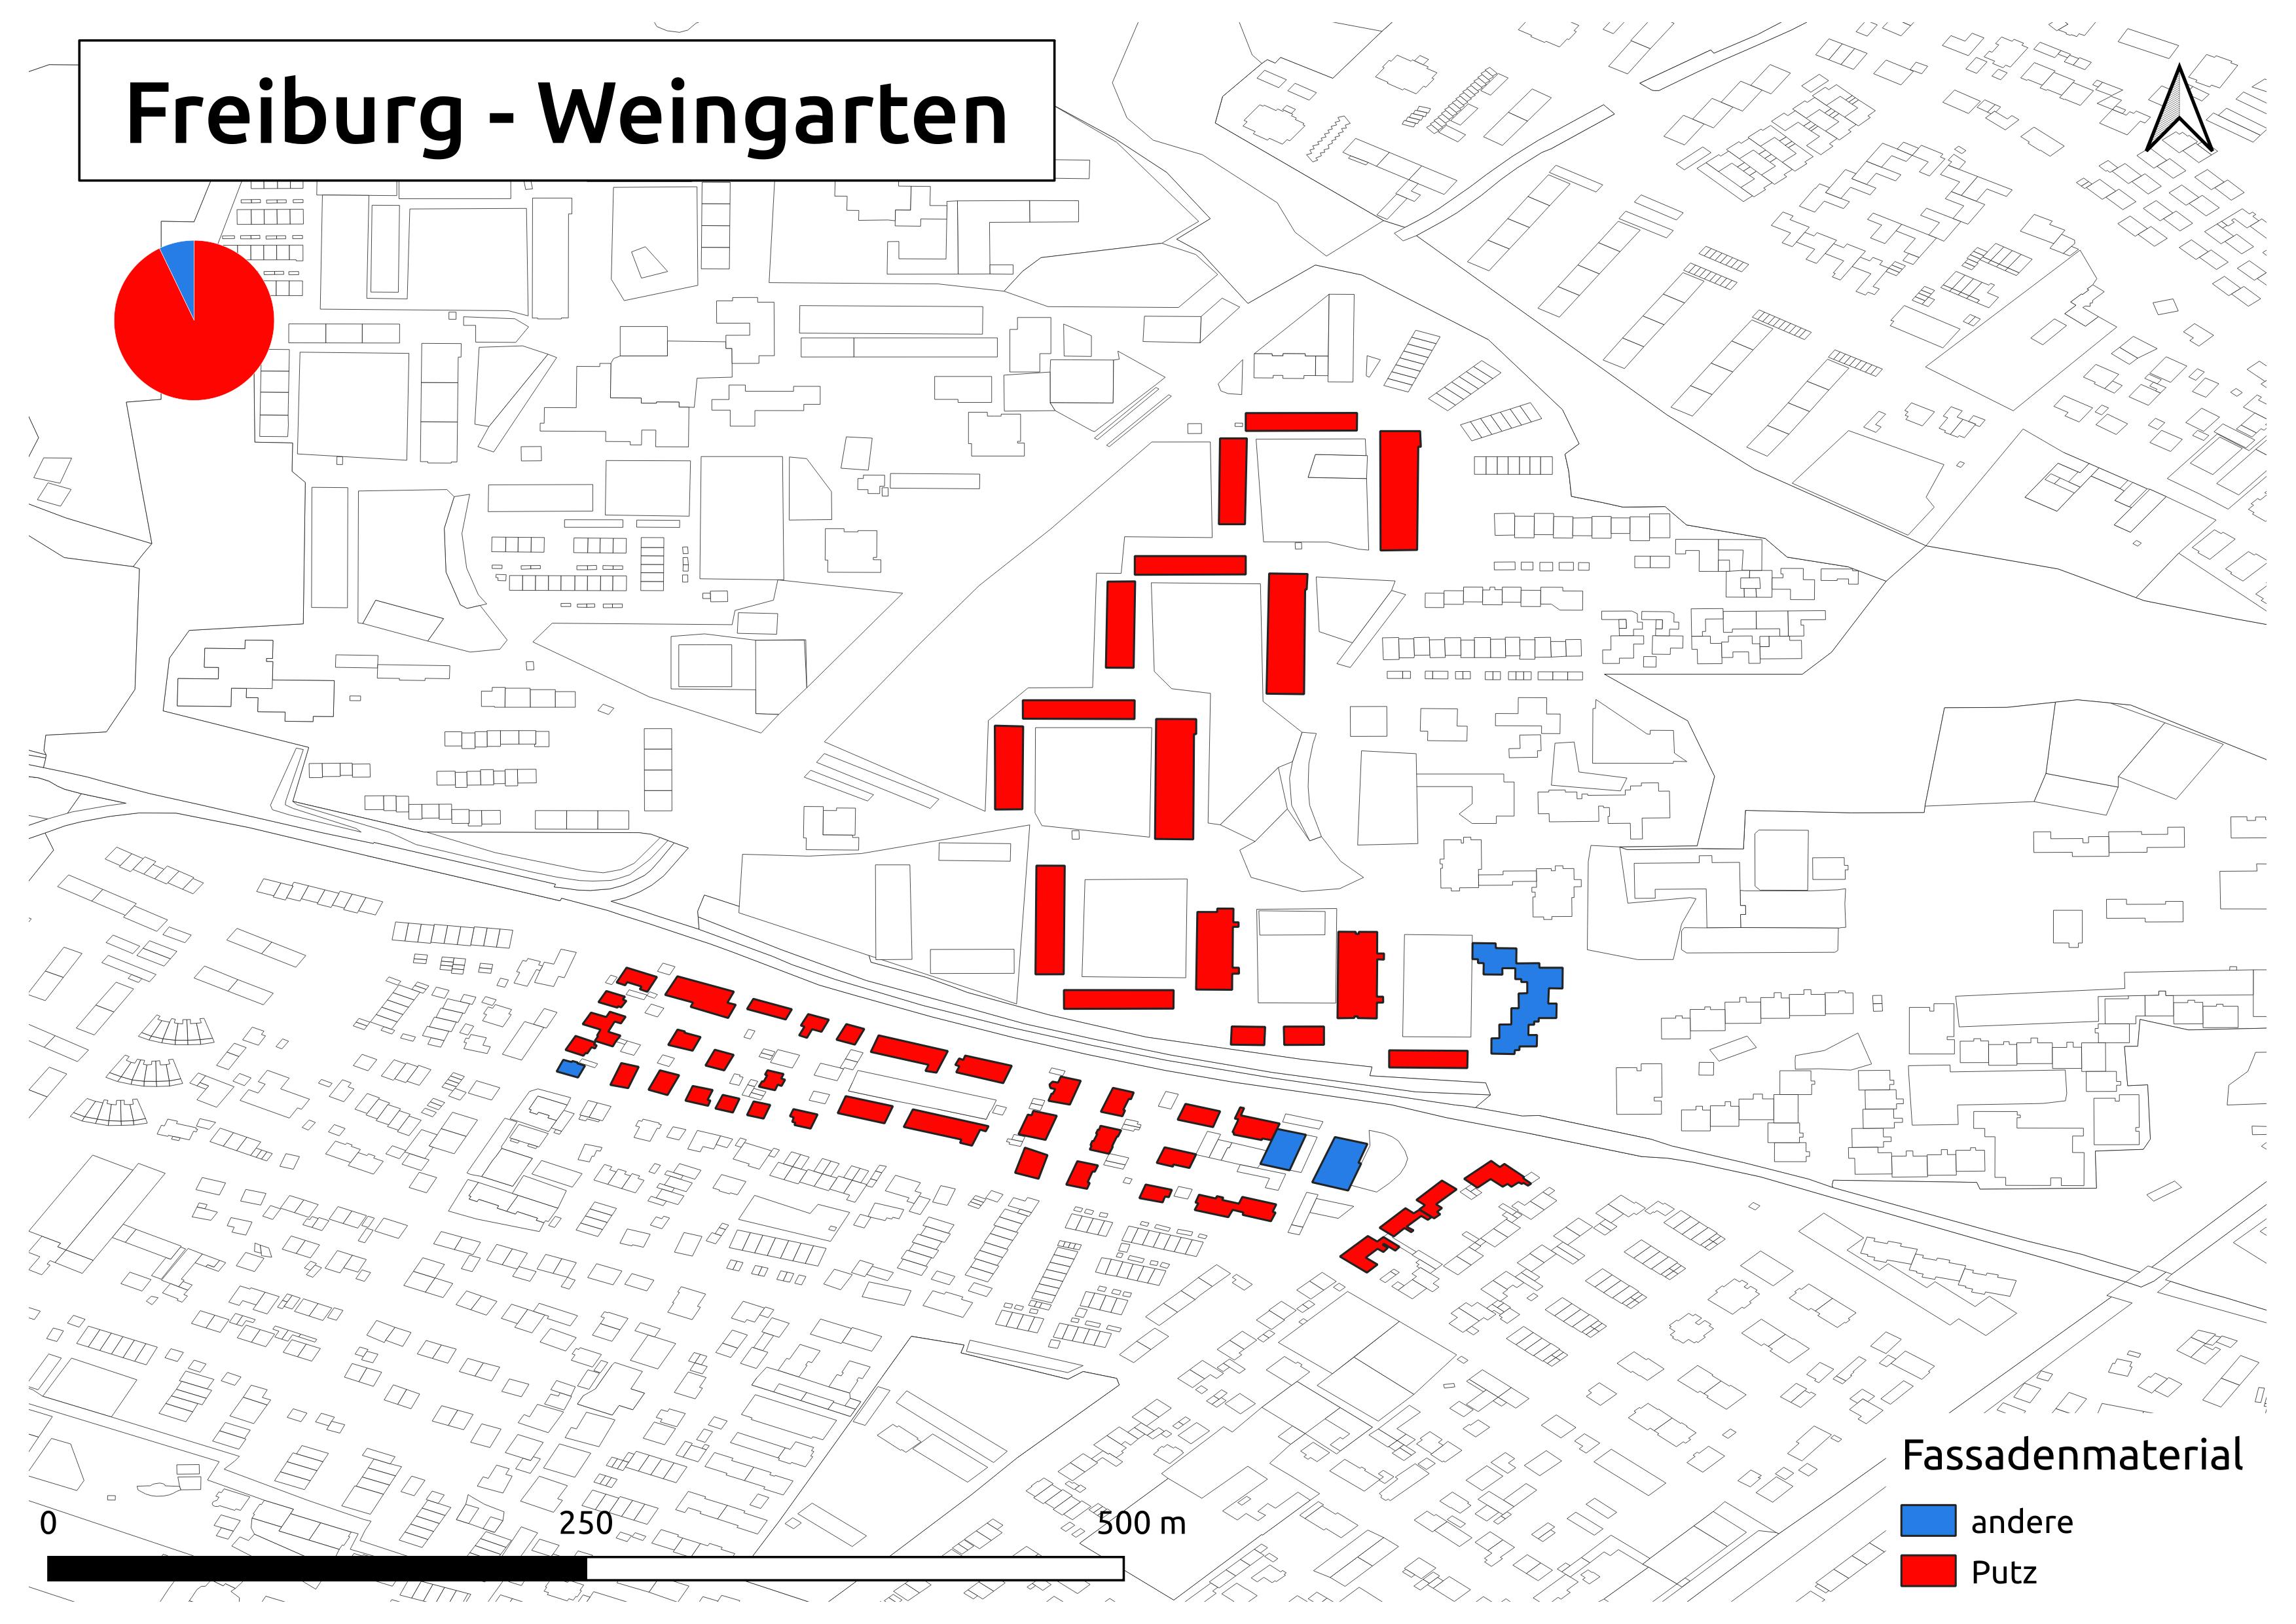 Karten_Biozidrisiko_Fassadenmaterial_Weingarten